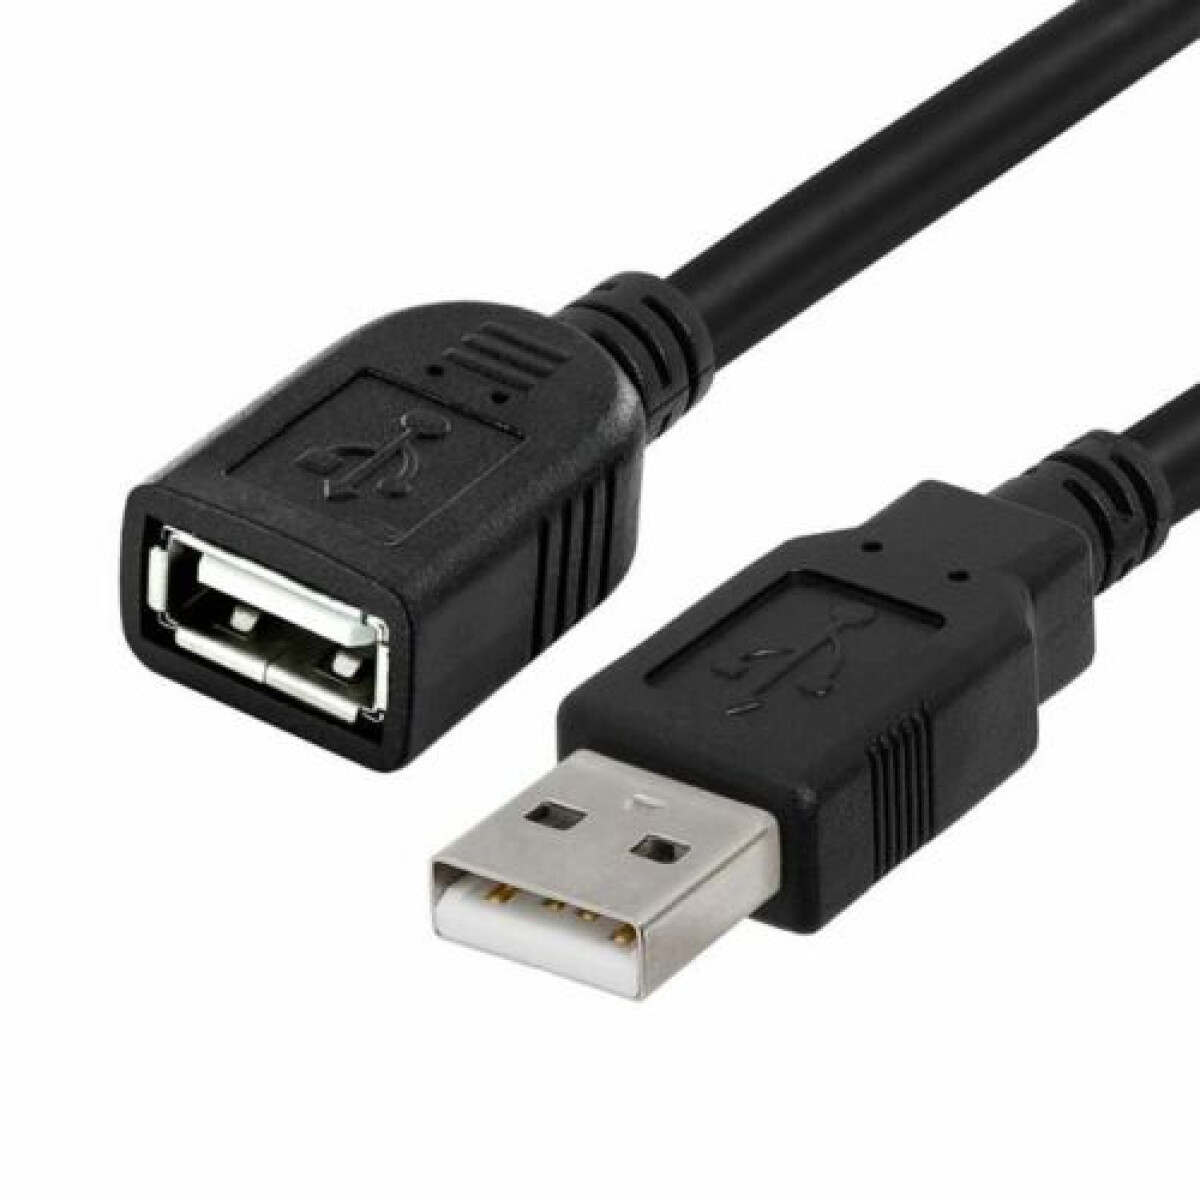 Cable USB 2.0 macho - hembra de 1,5 metros de largo 